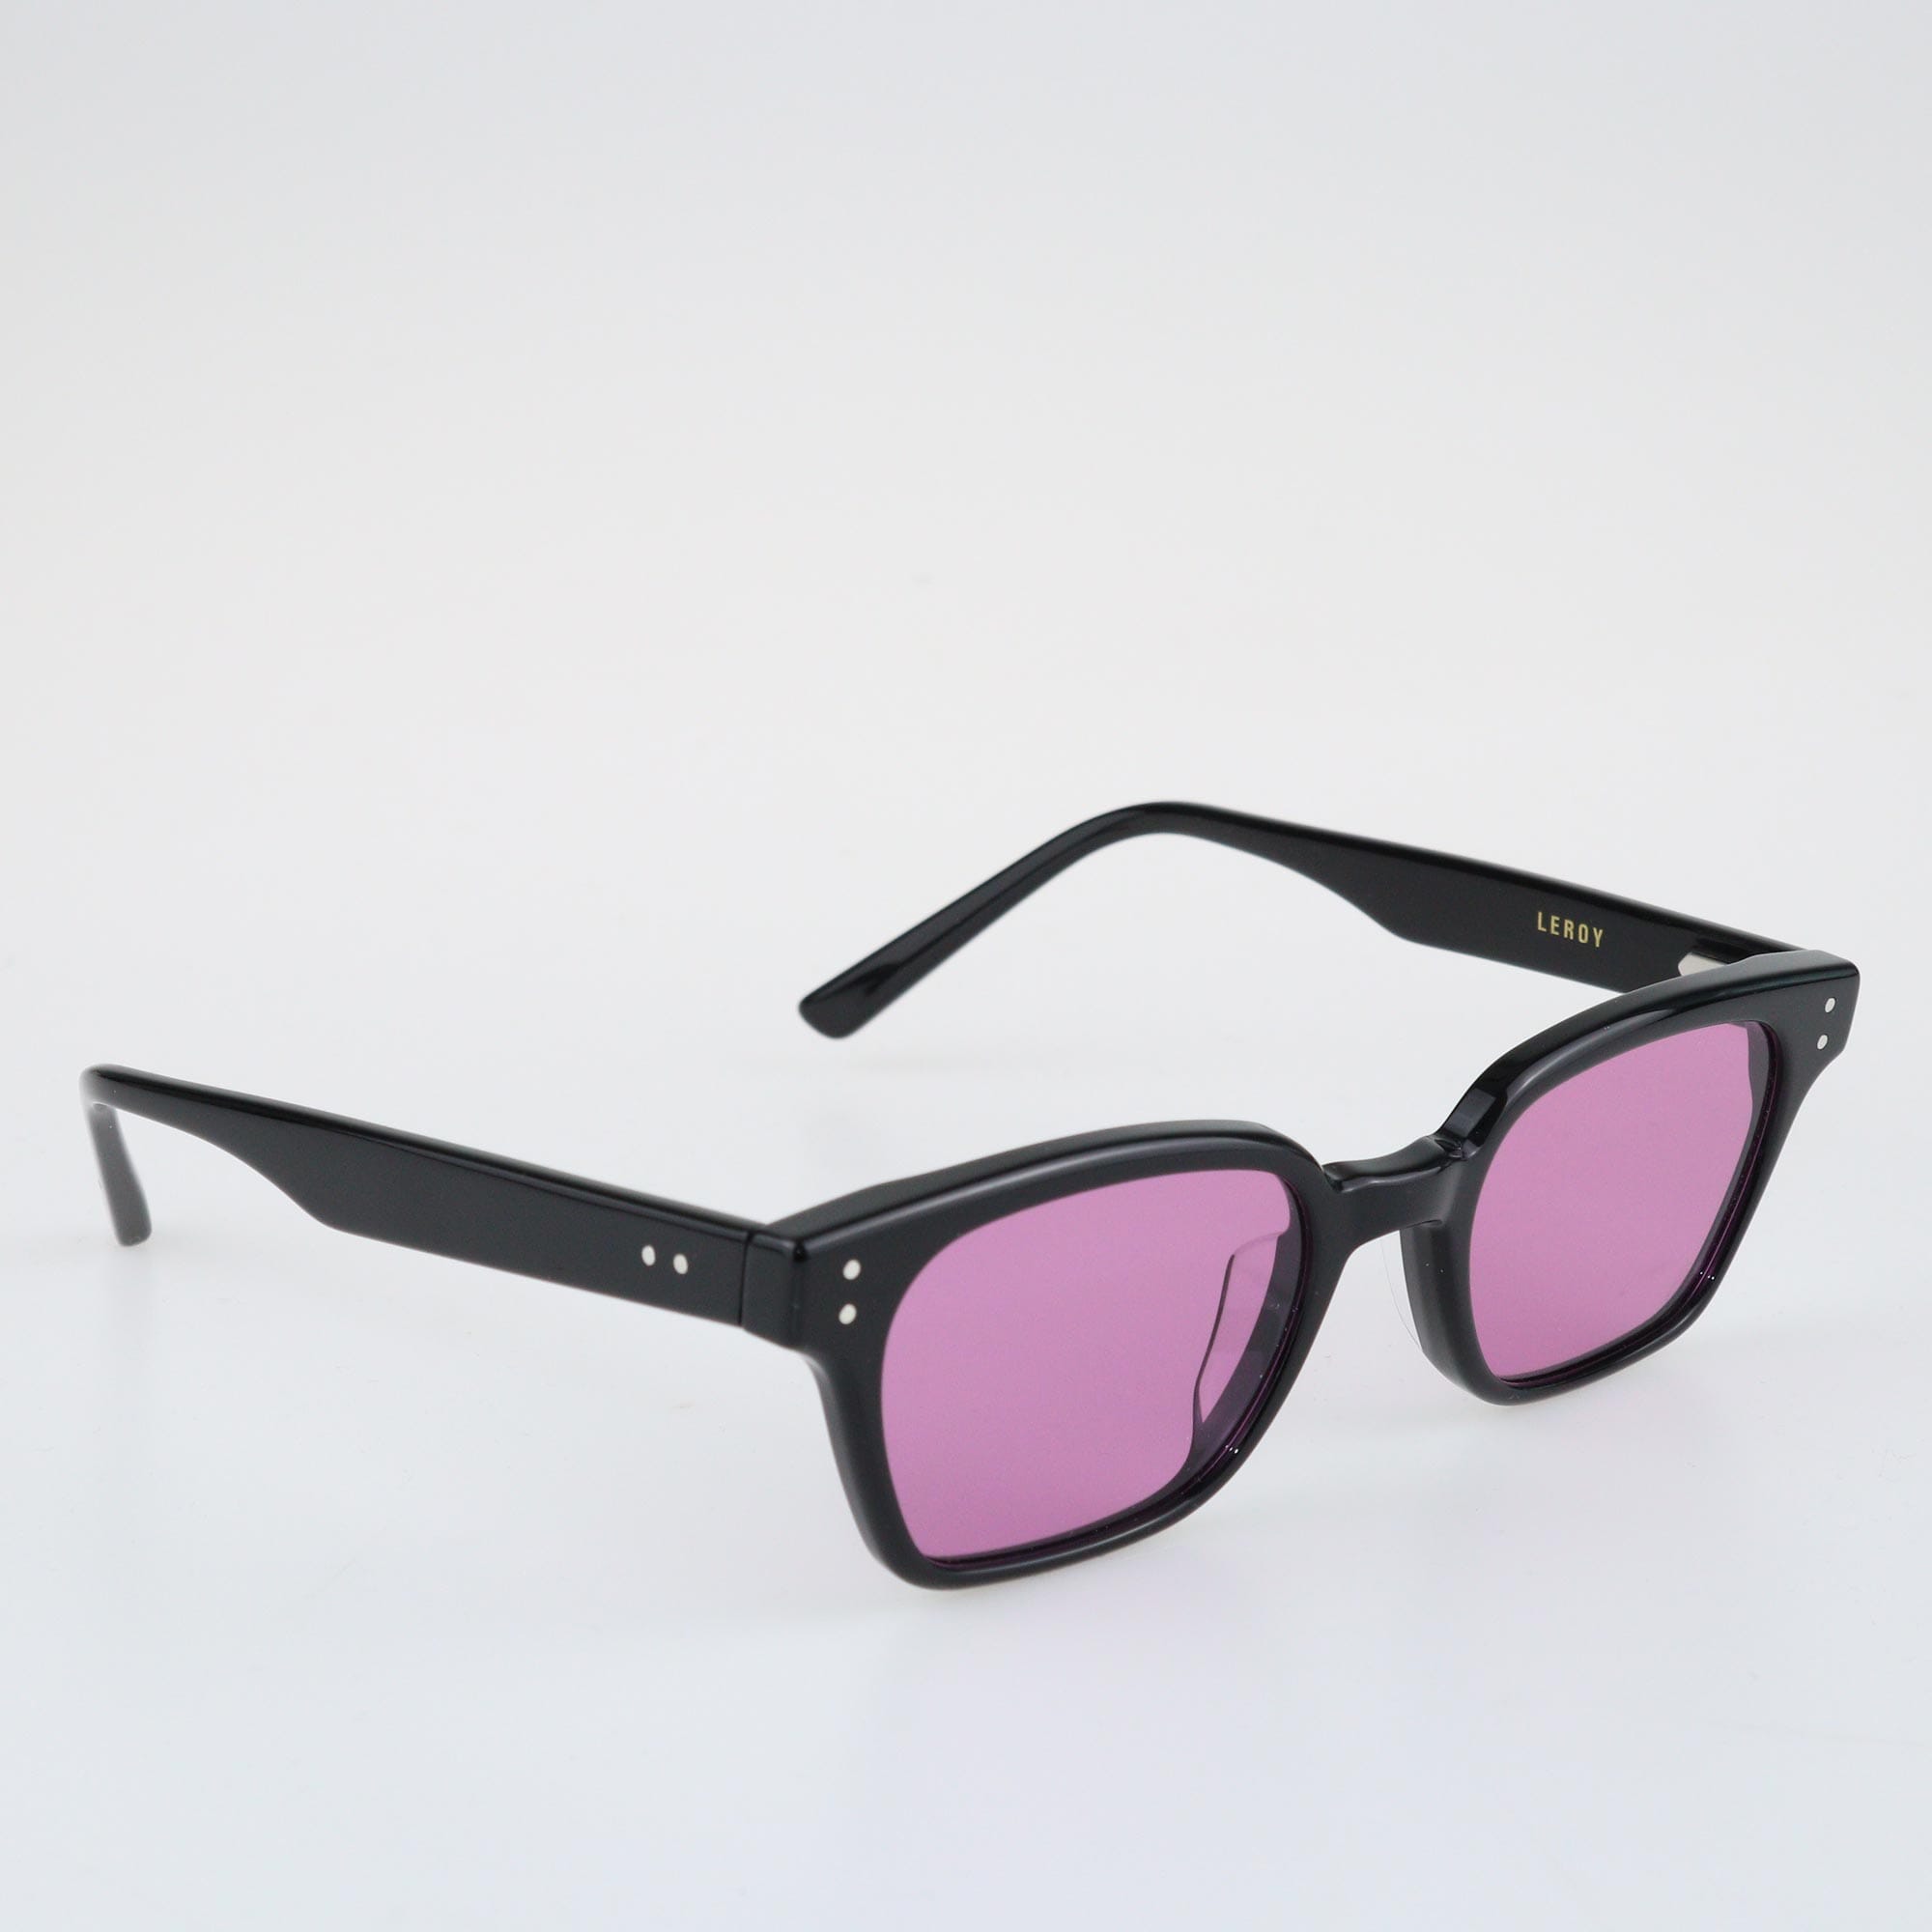 Black/Pink Leroy 01 Square Frame Sunglasses Sunglasses Gentle Monster 